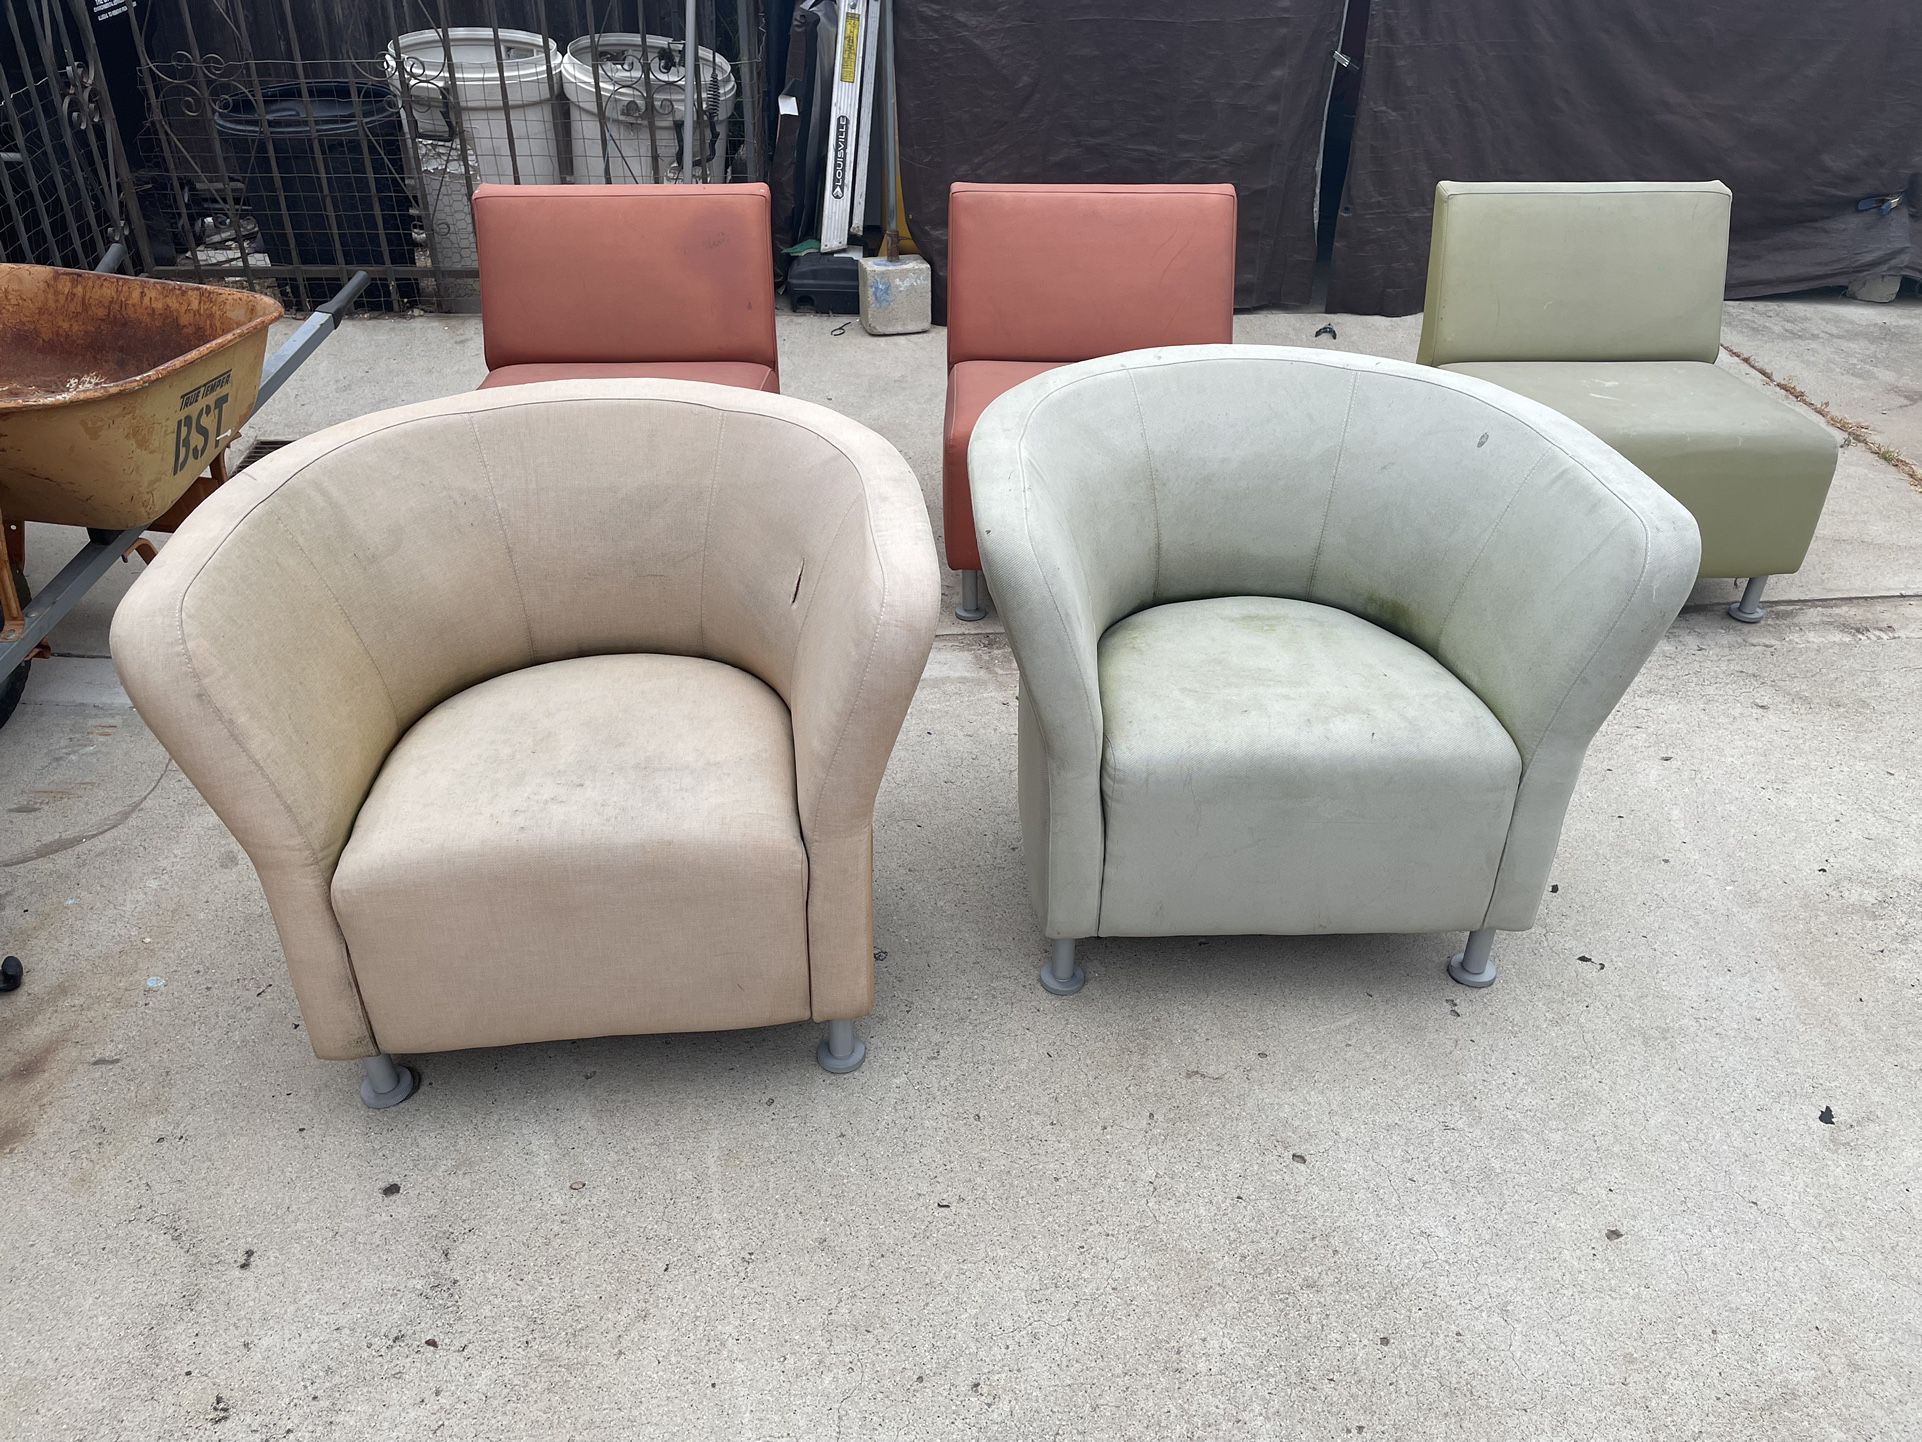 Orange and Green Lounge Chairs